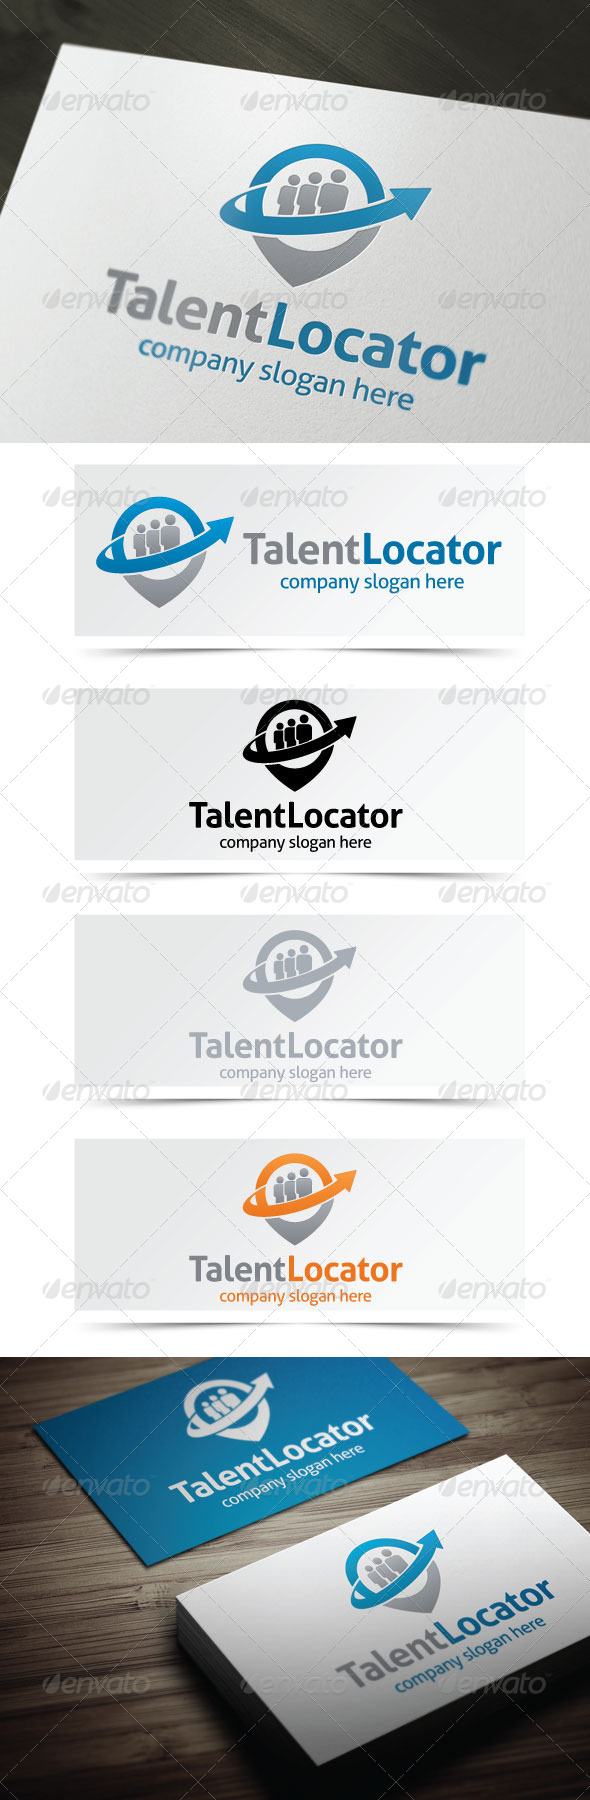 Talent Locator